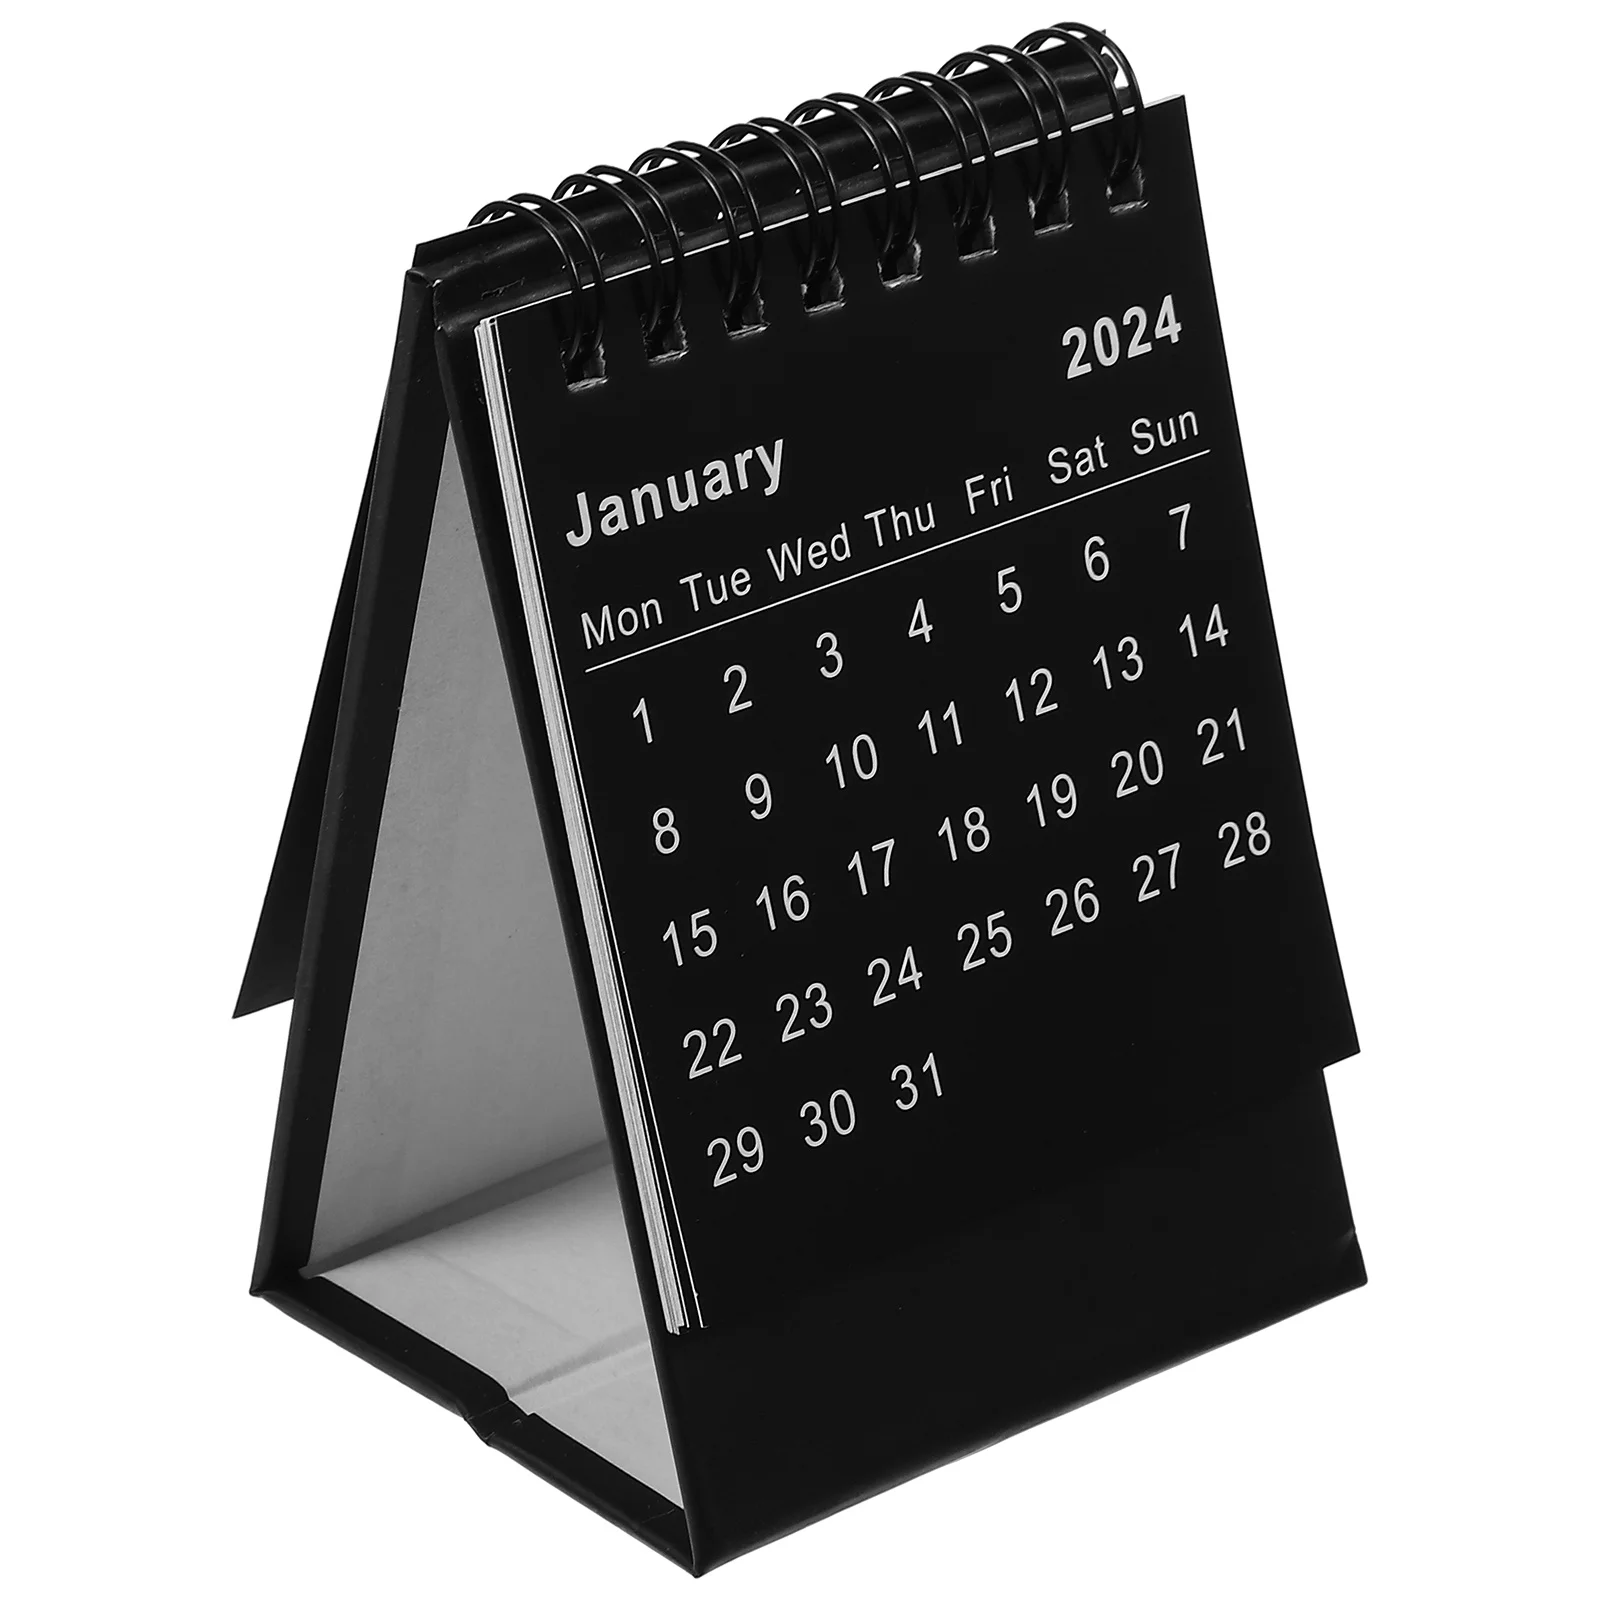 Календарь для офисного стола маленький календарь 2024, офисный стол, календарь, переплет календарь